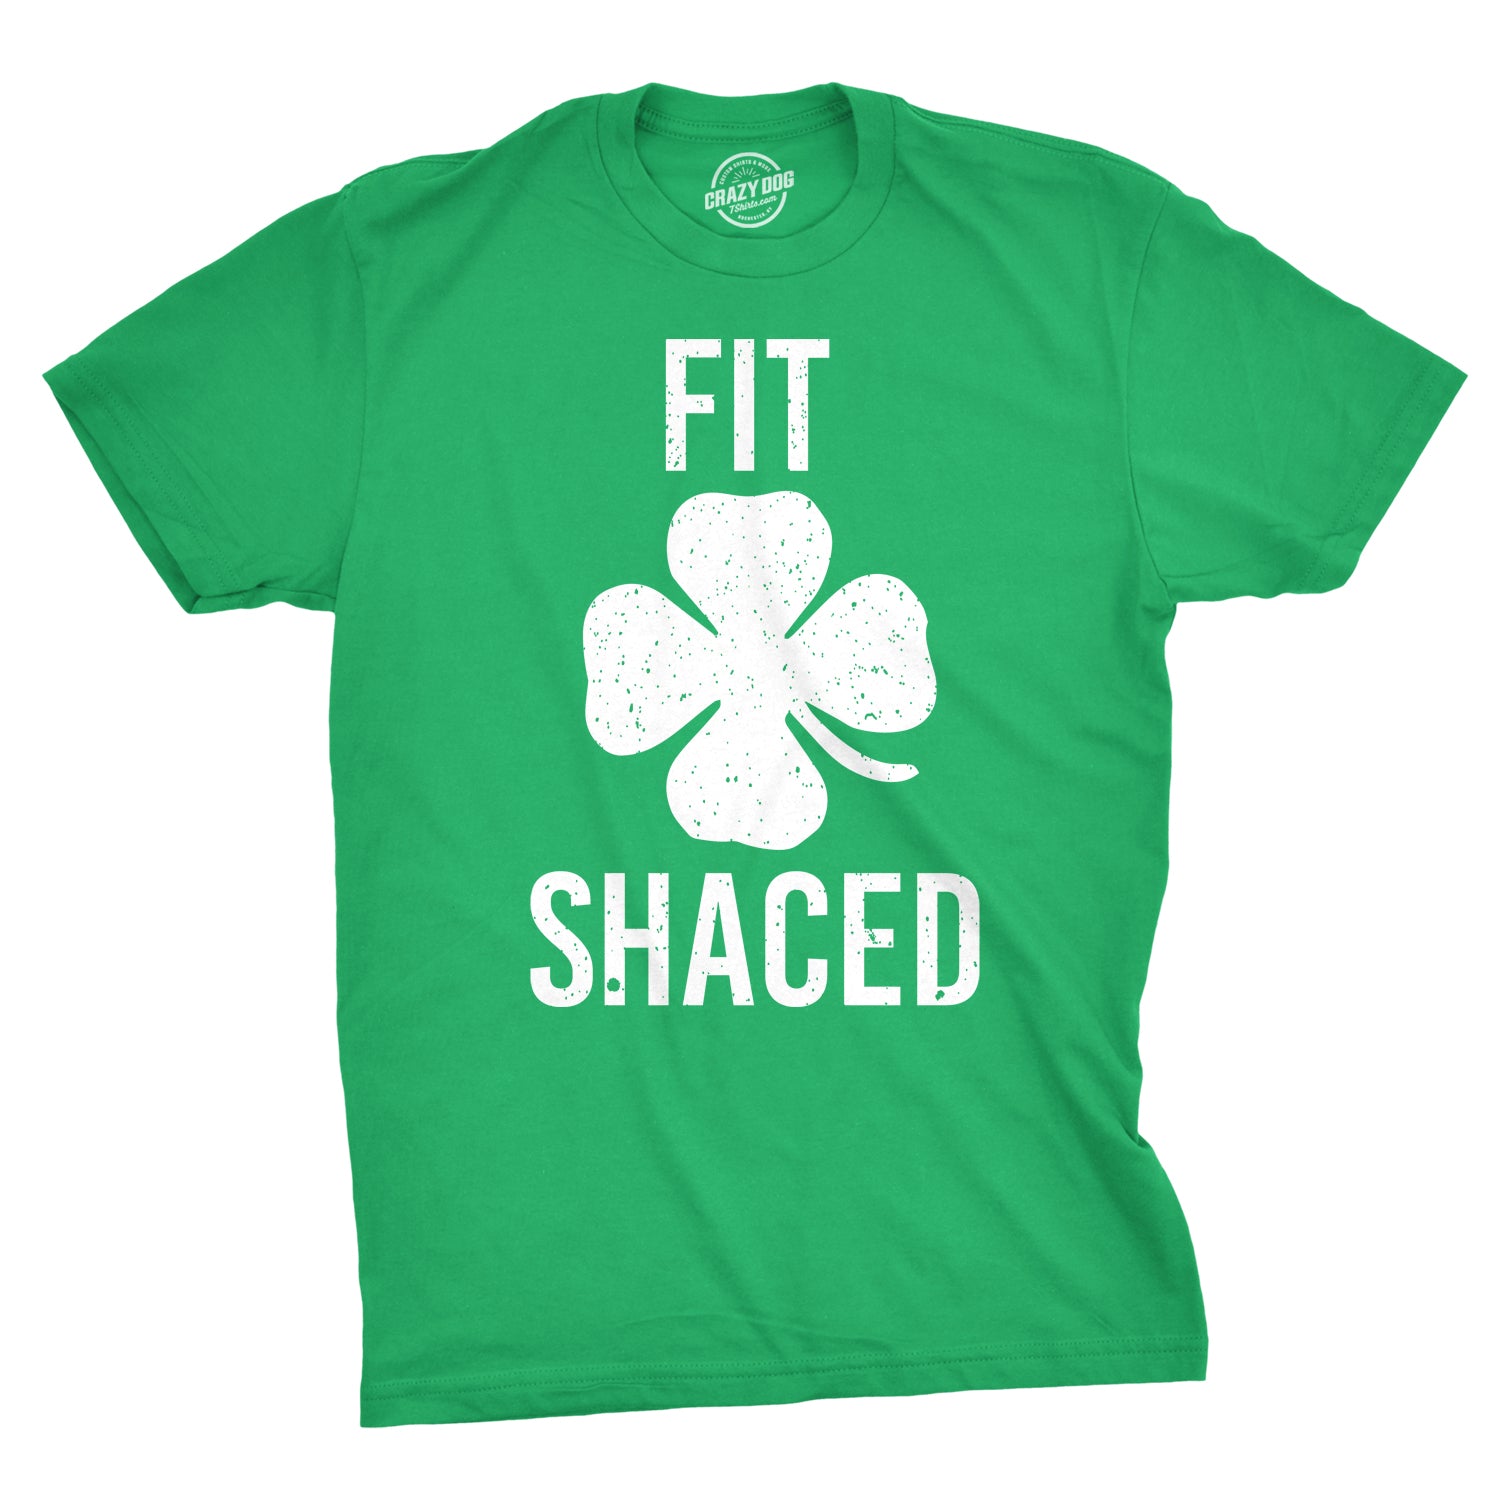 Irish Yoga T-Shirt St. Patrick's Day Funny Beer Sarcastic